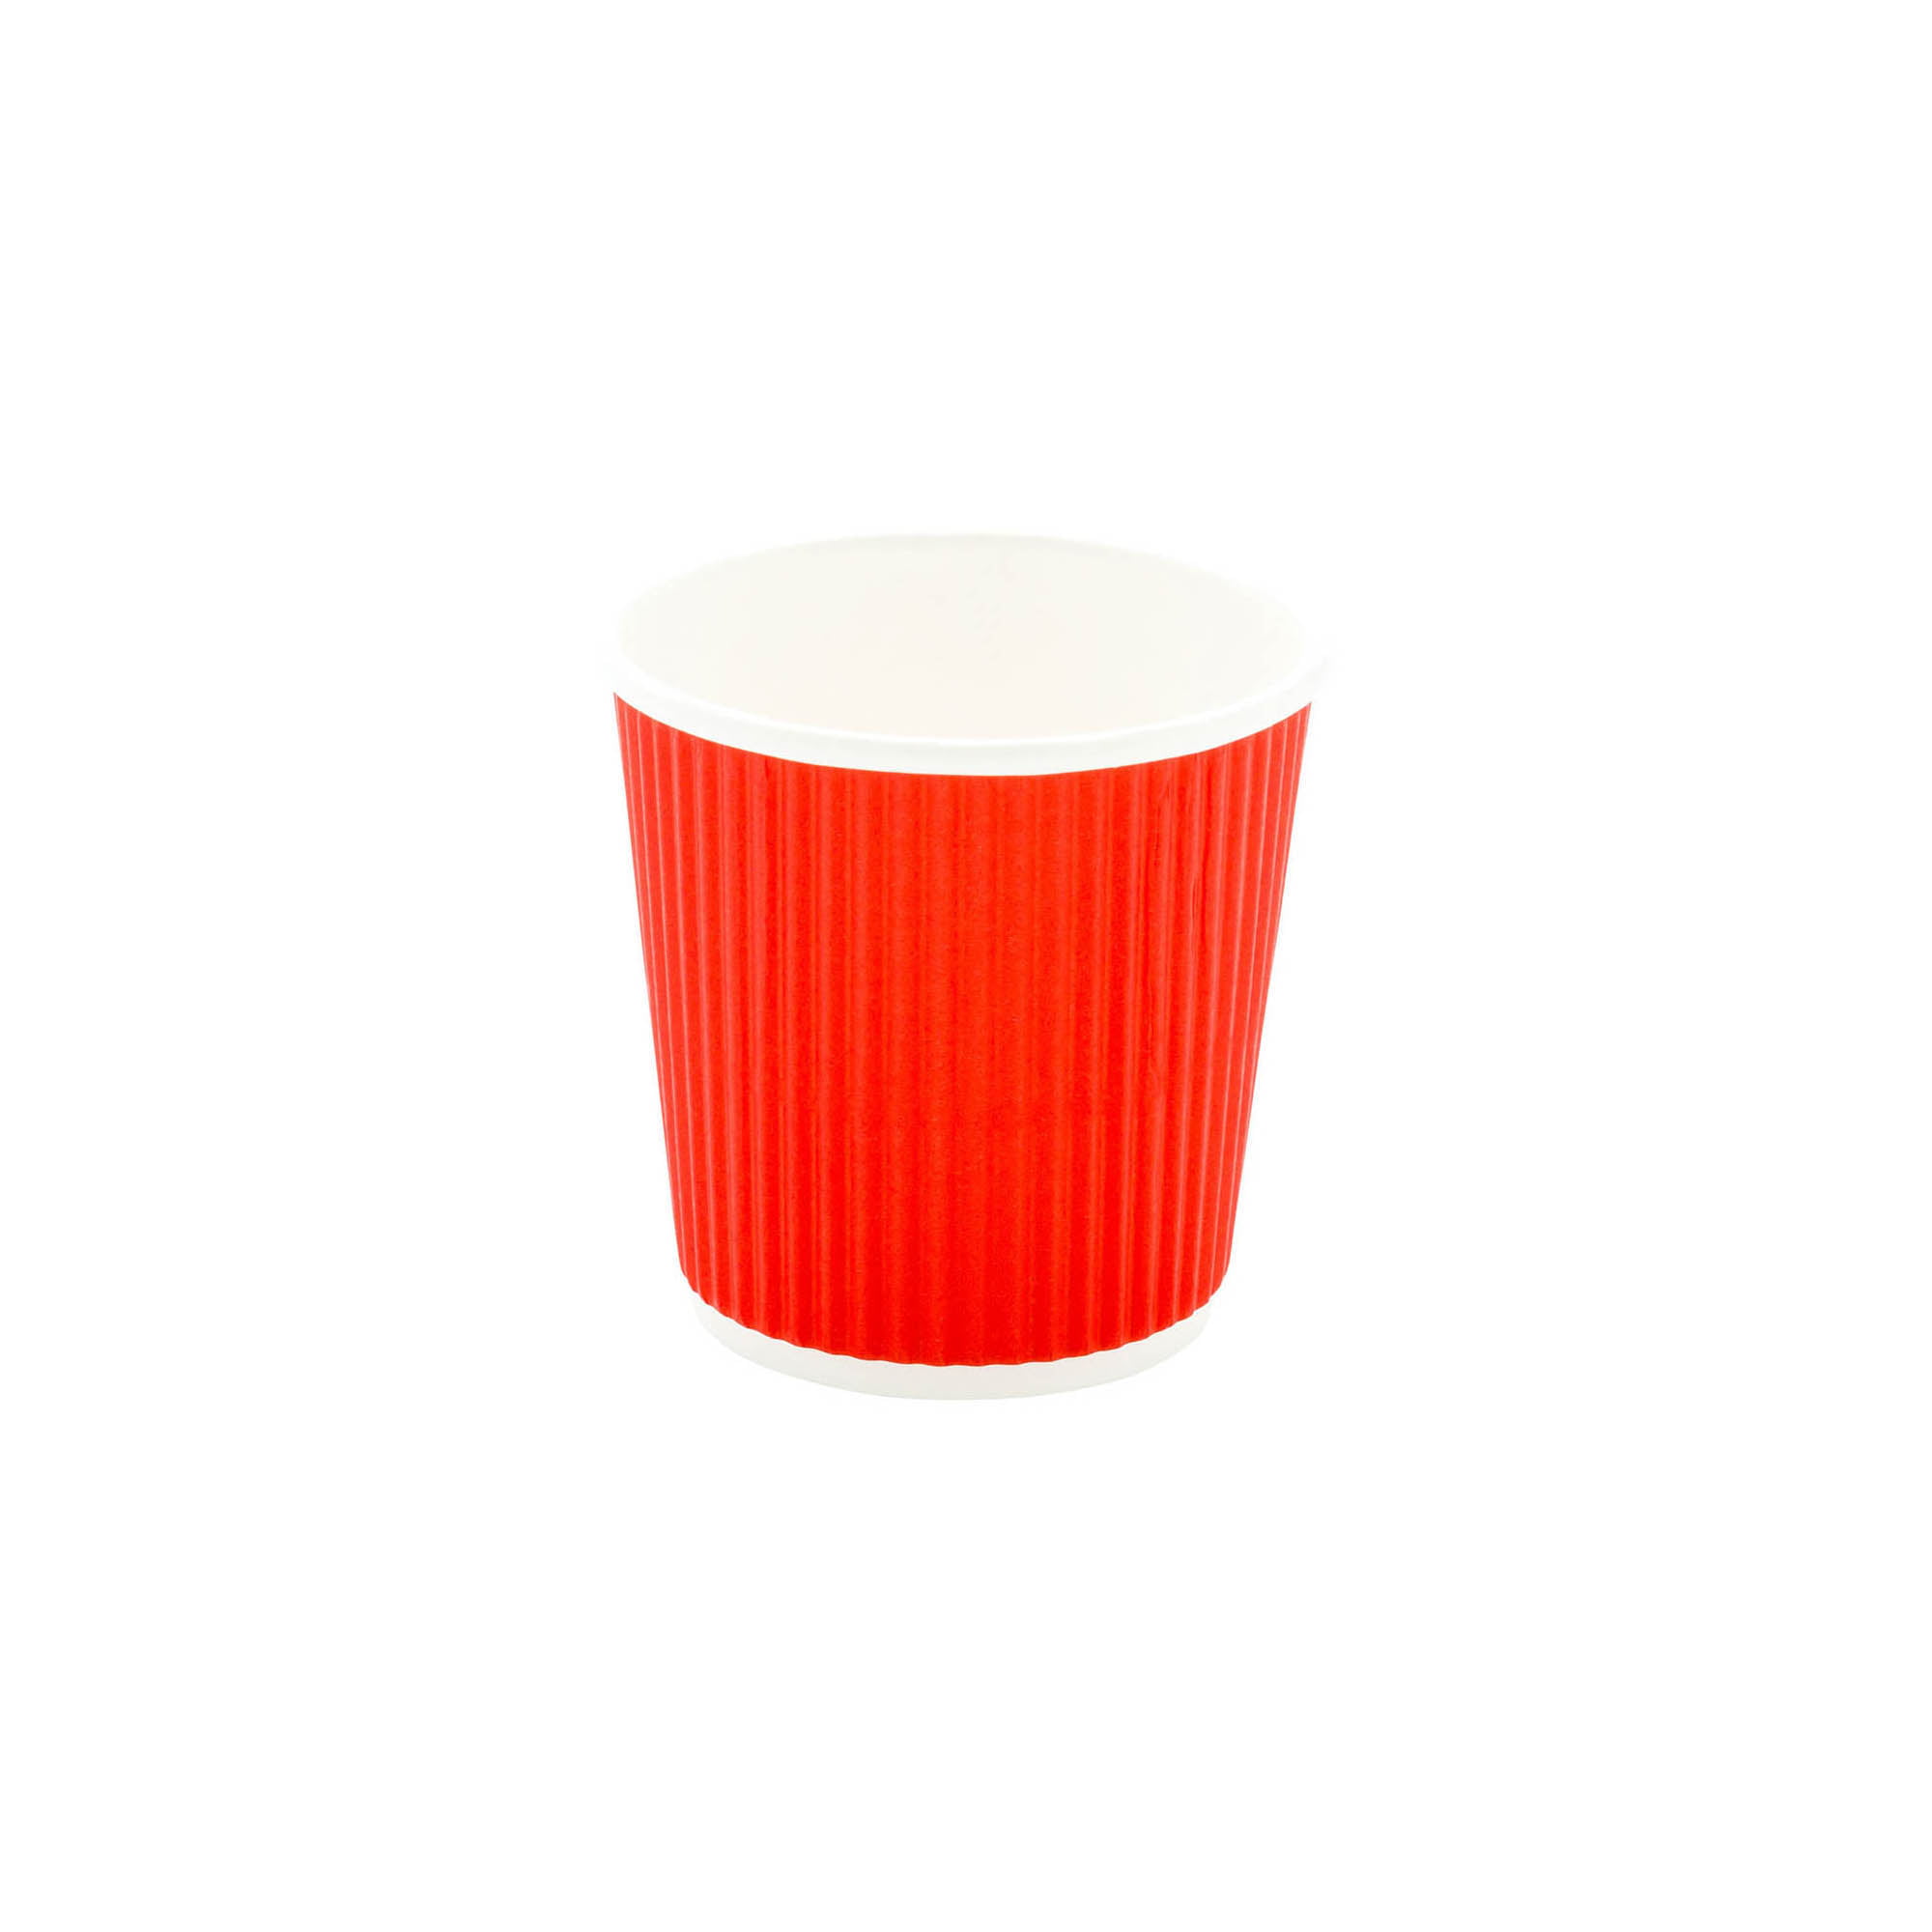 vidaXL 1000 pcs Disposable Coffee Cups Paper 120 ml 4 oz